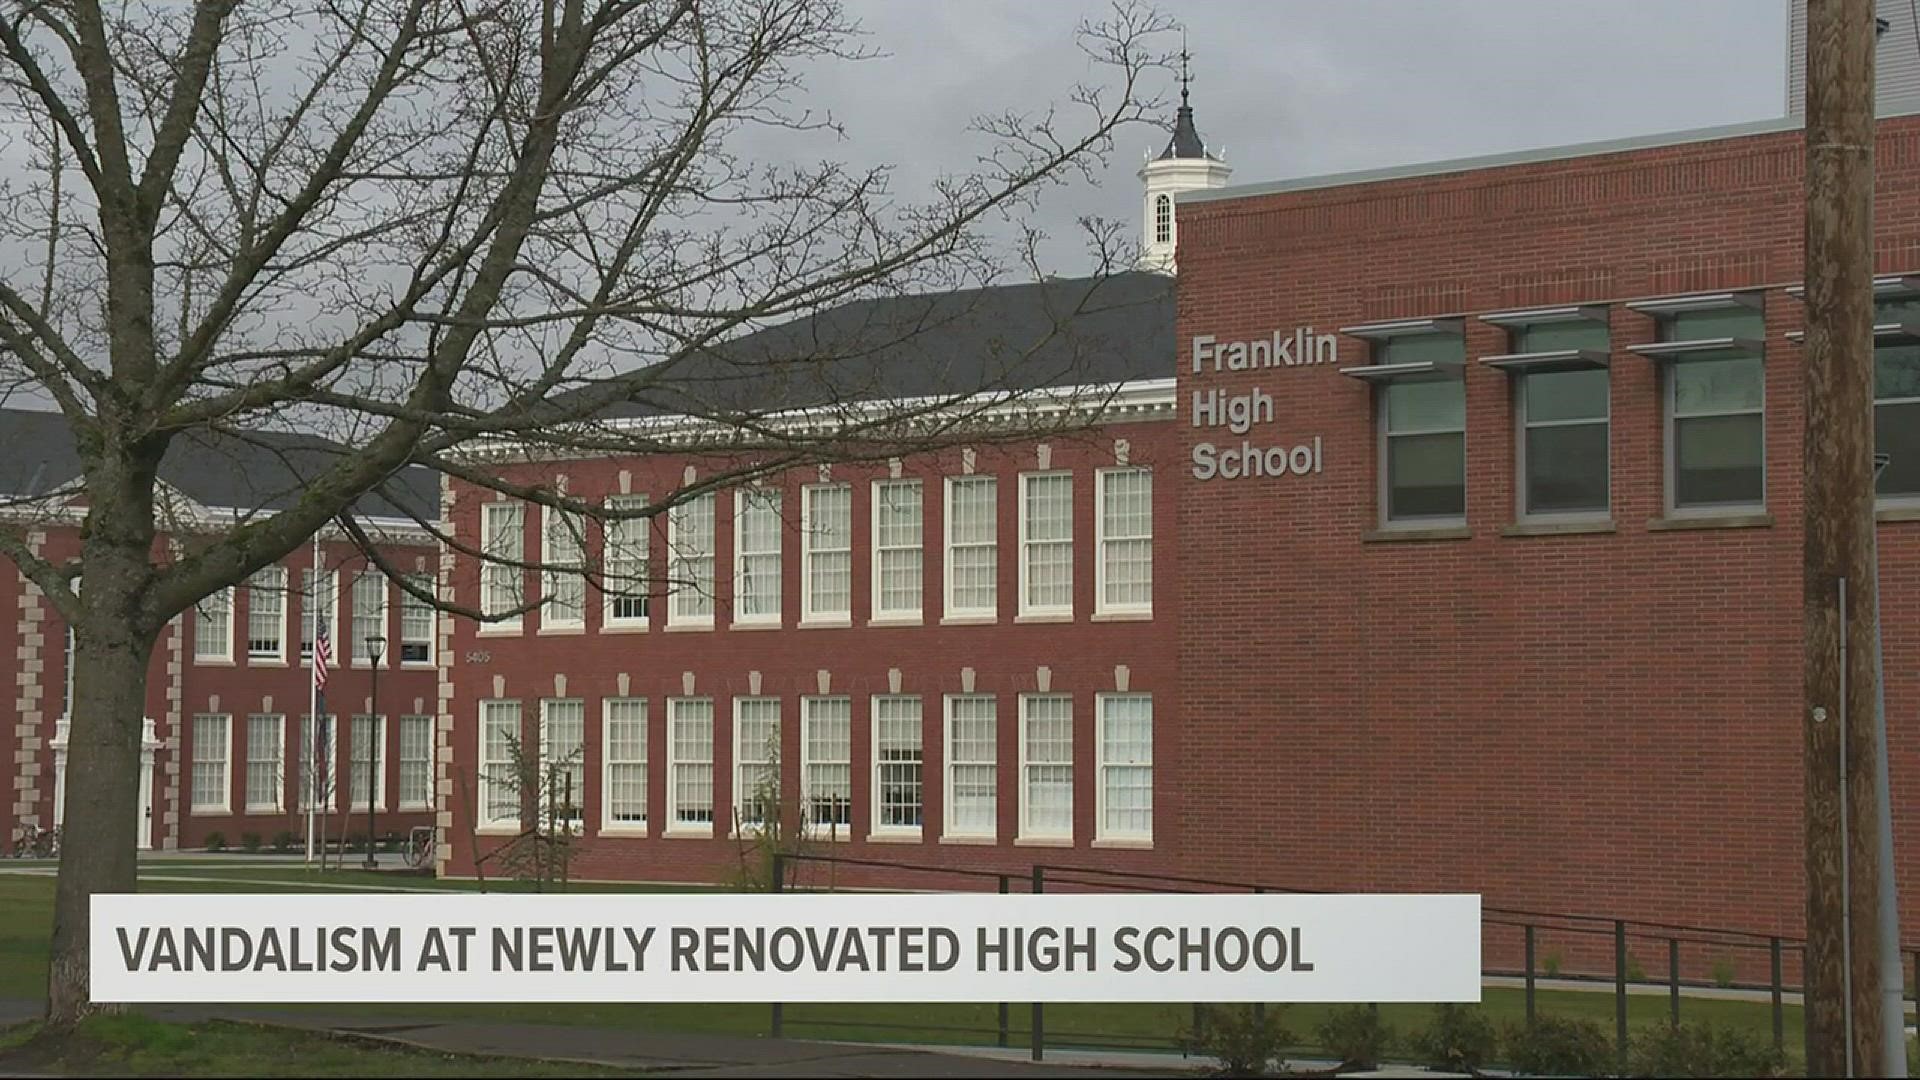 Franklin High School was vandalized.